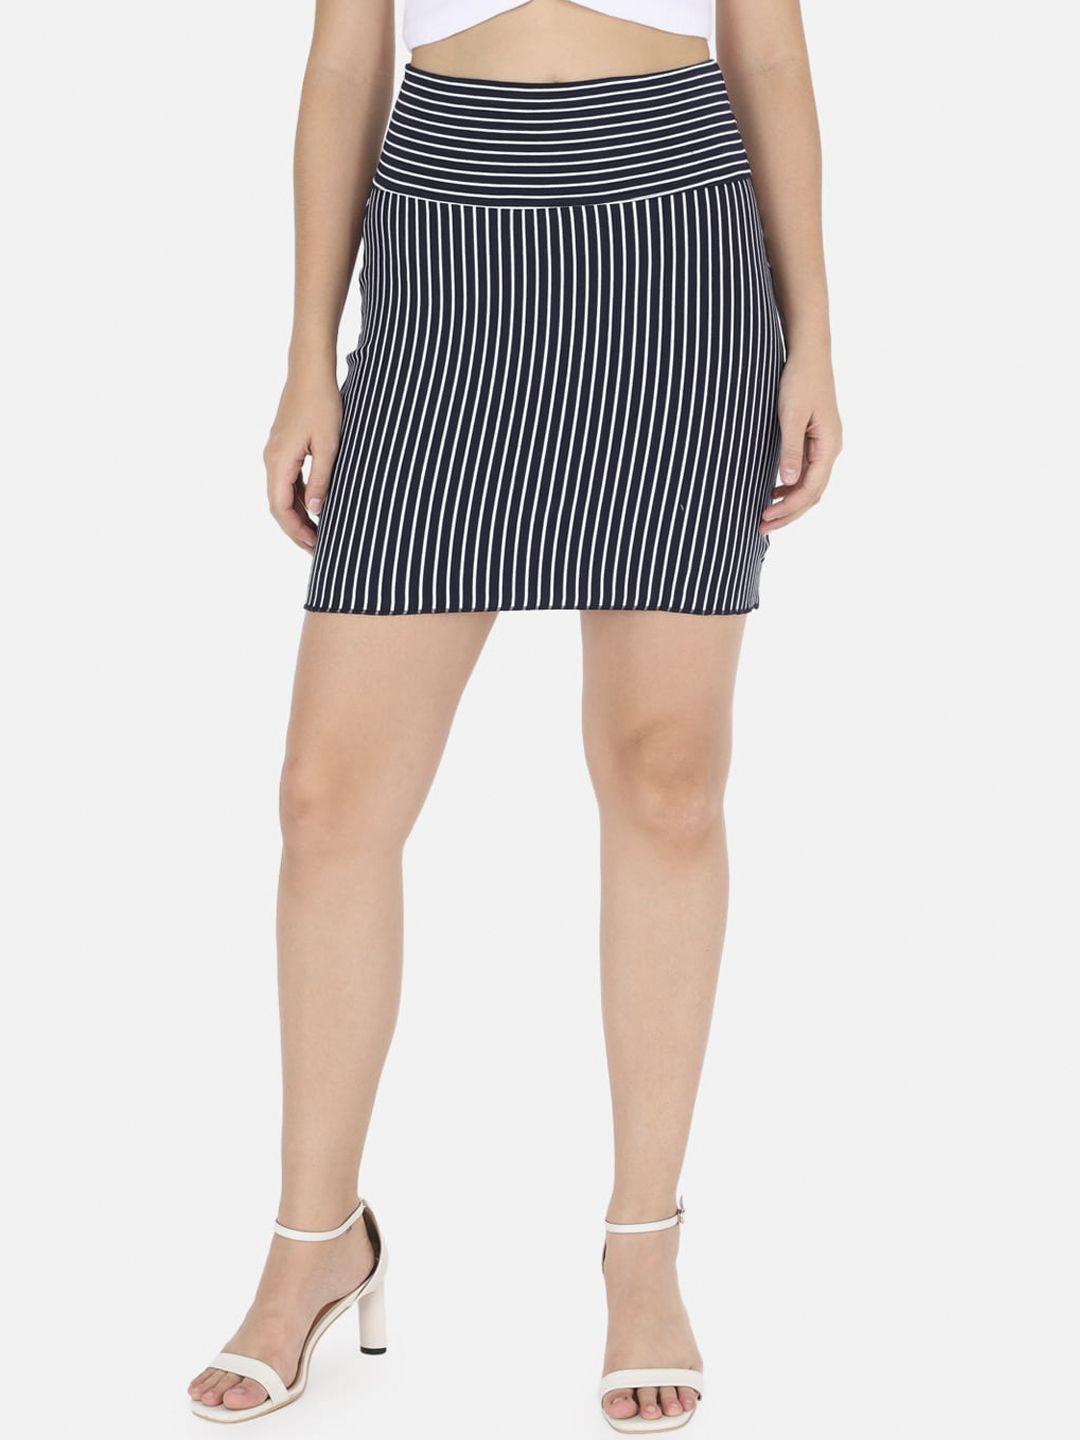 trend arrest women navy blue & white striped pure cotton mini pencil skirt